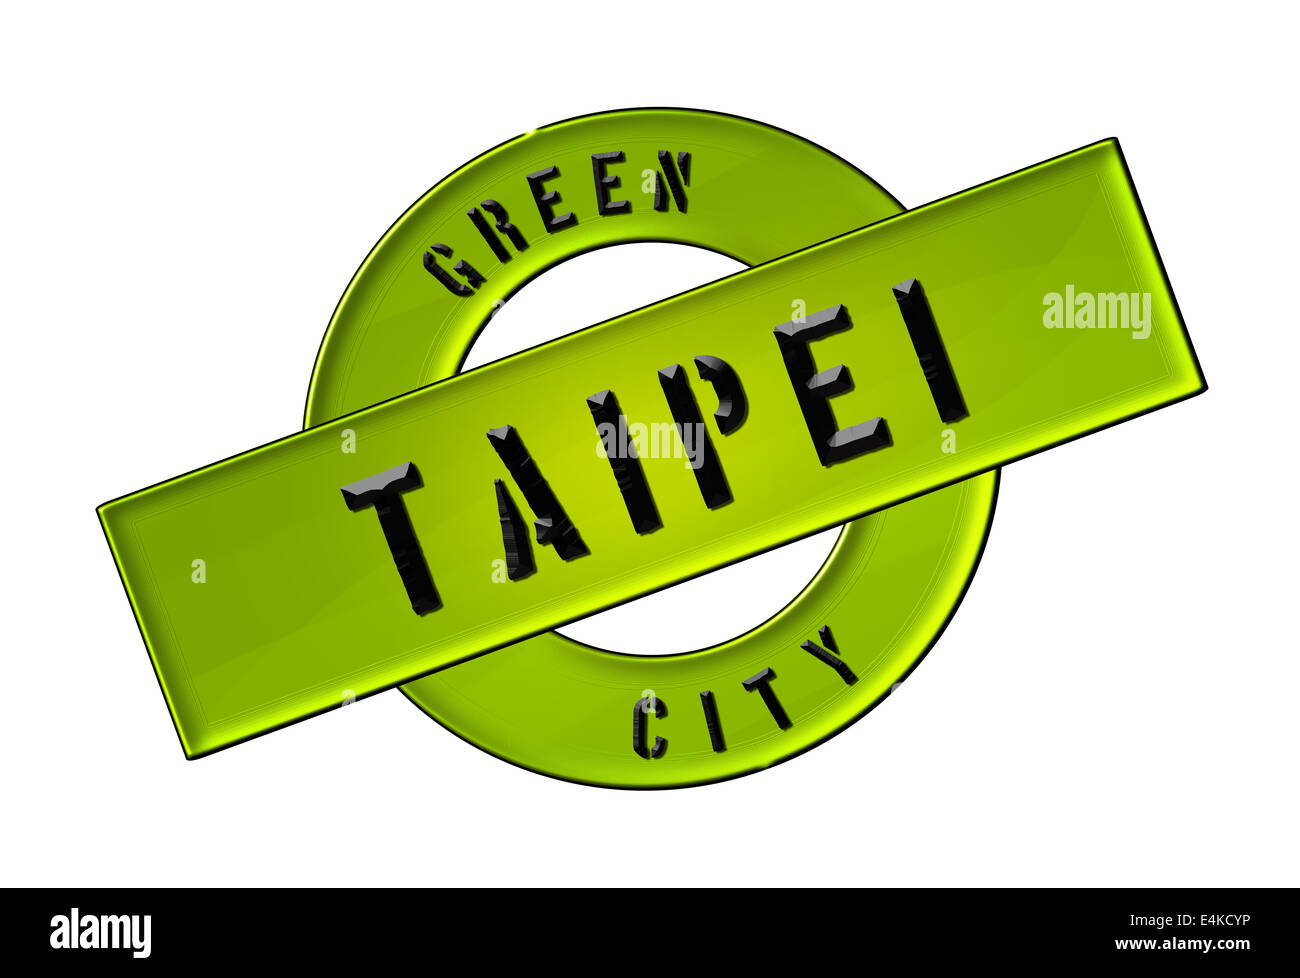 GREEN CITY TAIPEI Stock Photo